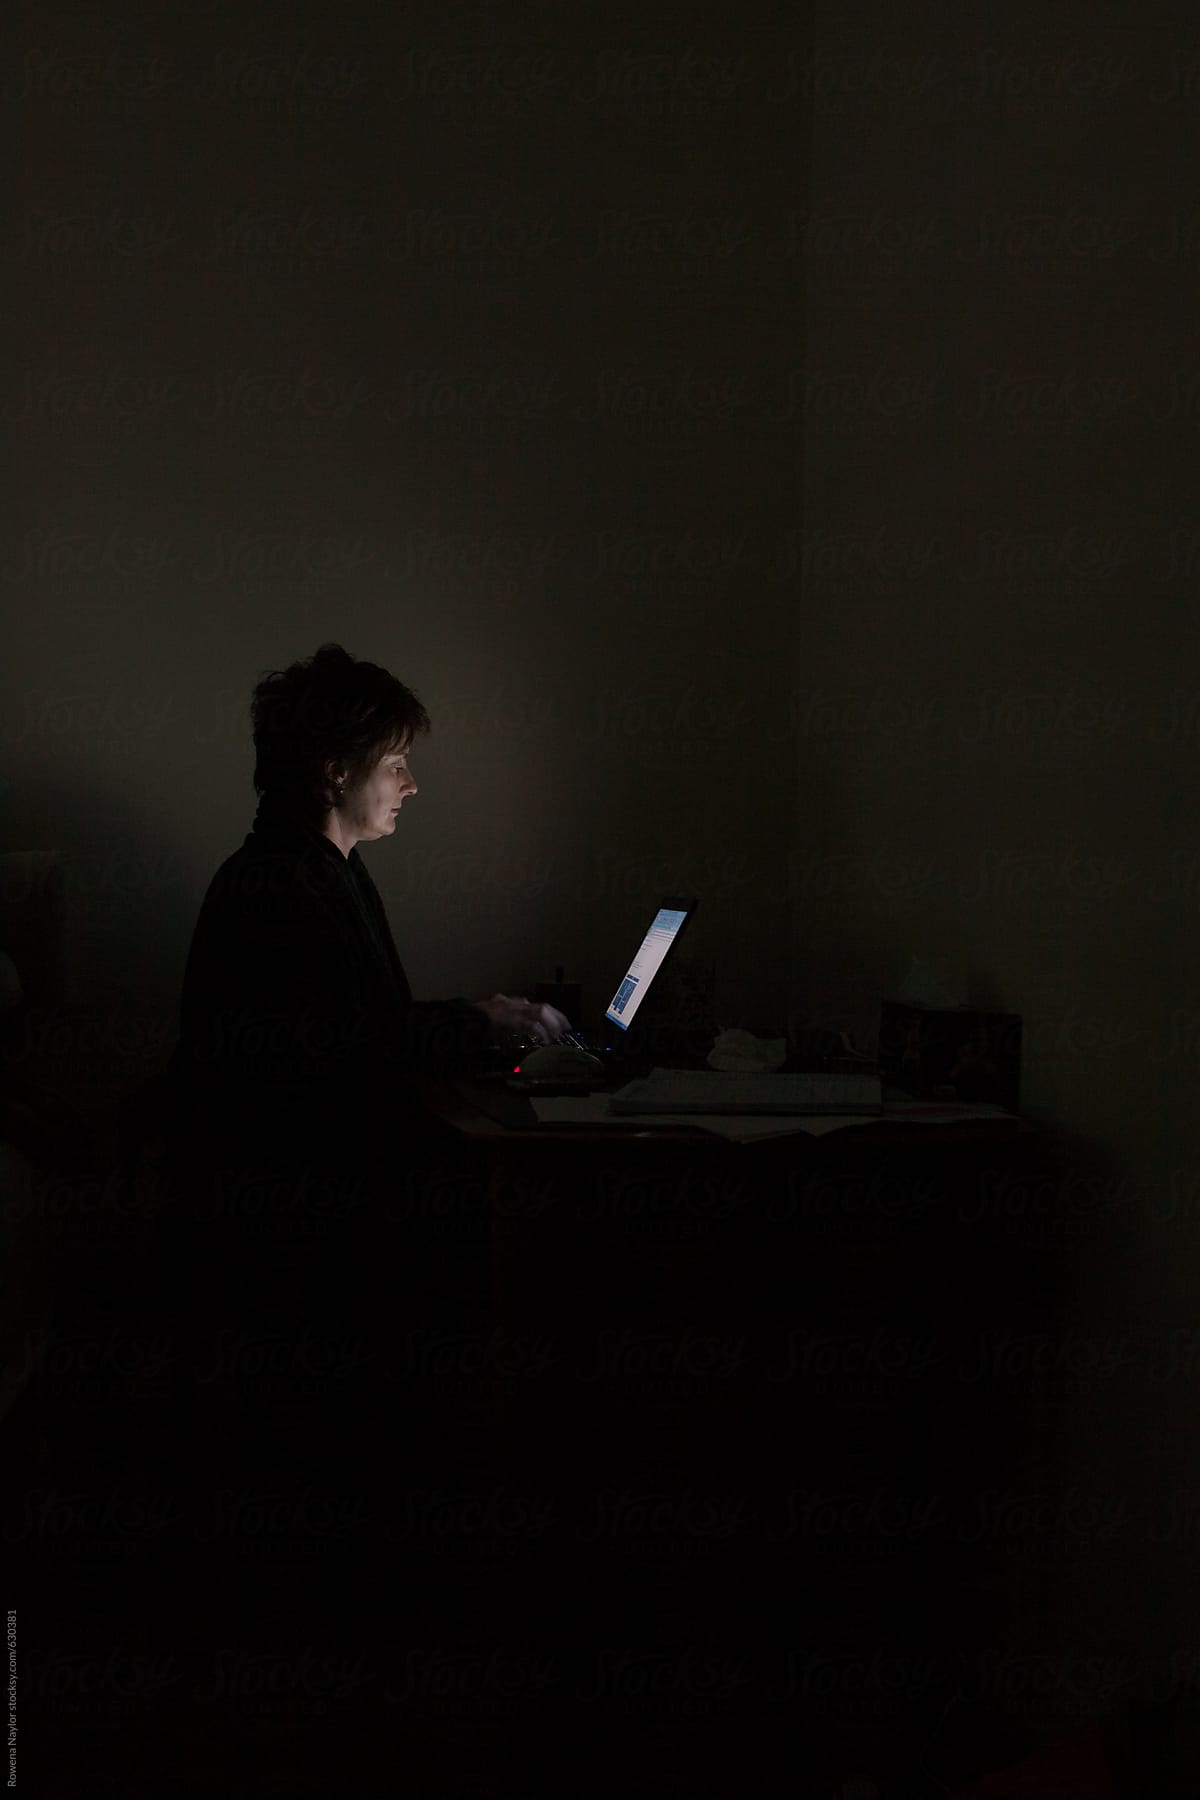 Woman using laptop in dimly lit room